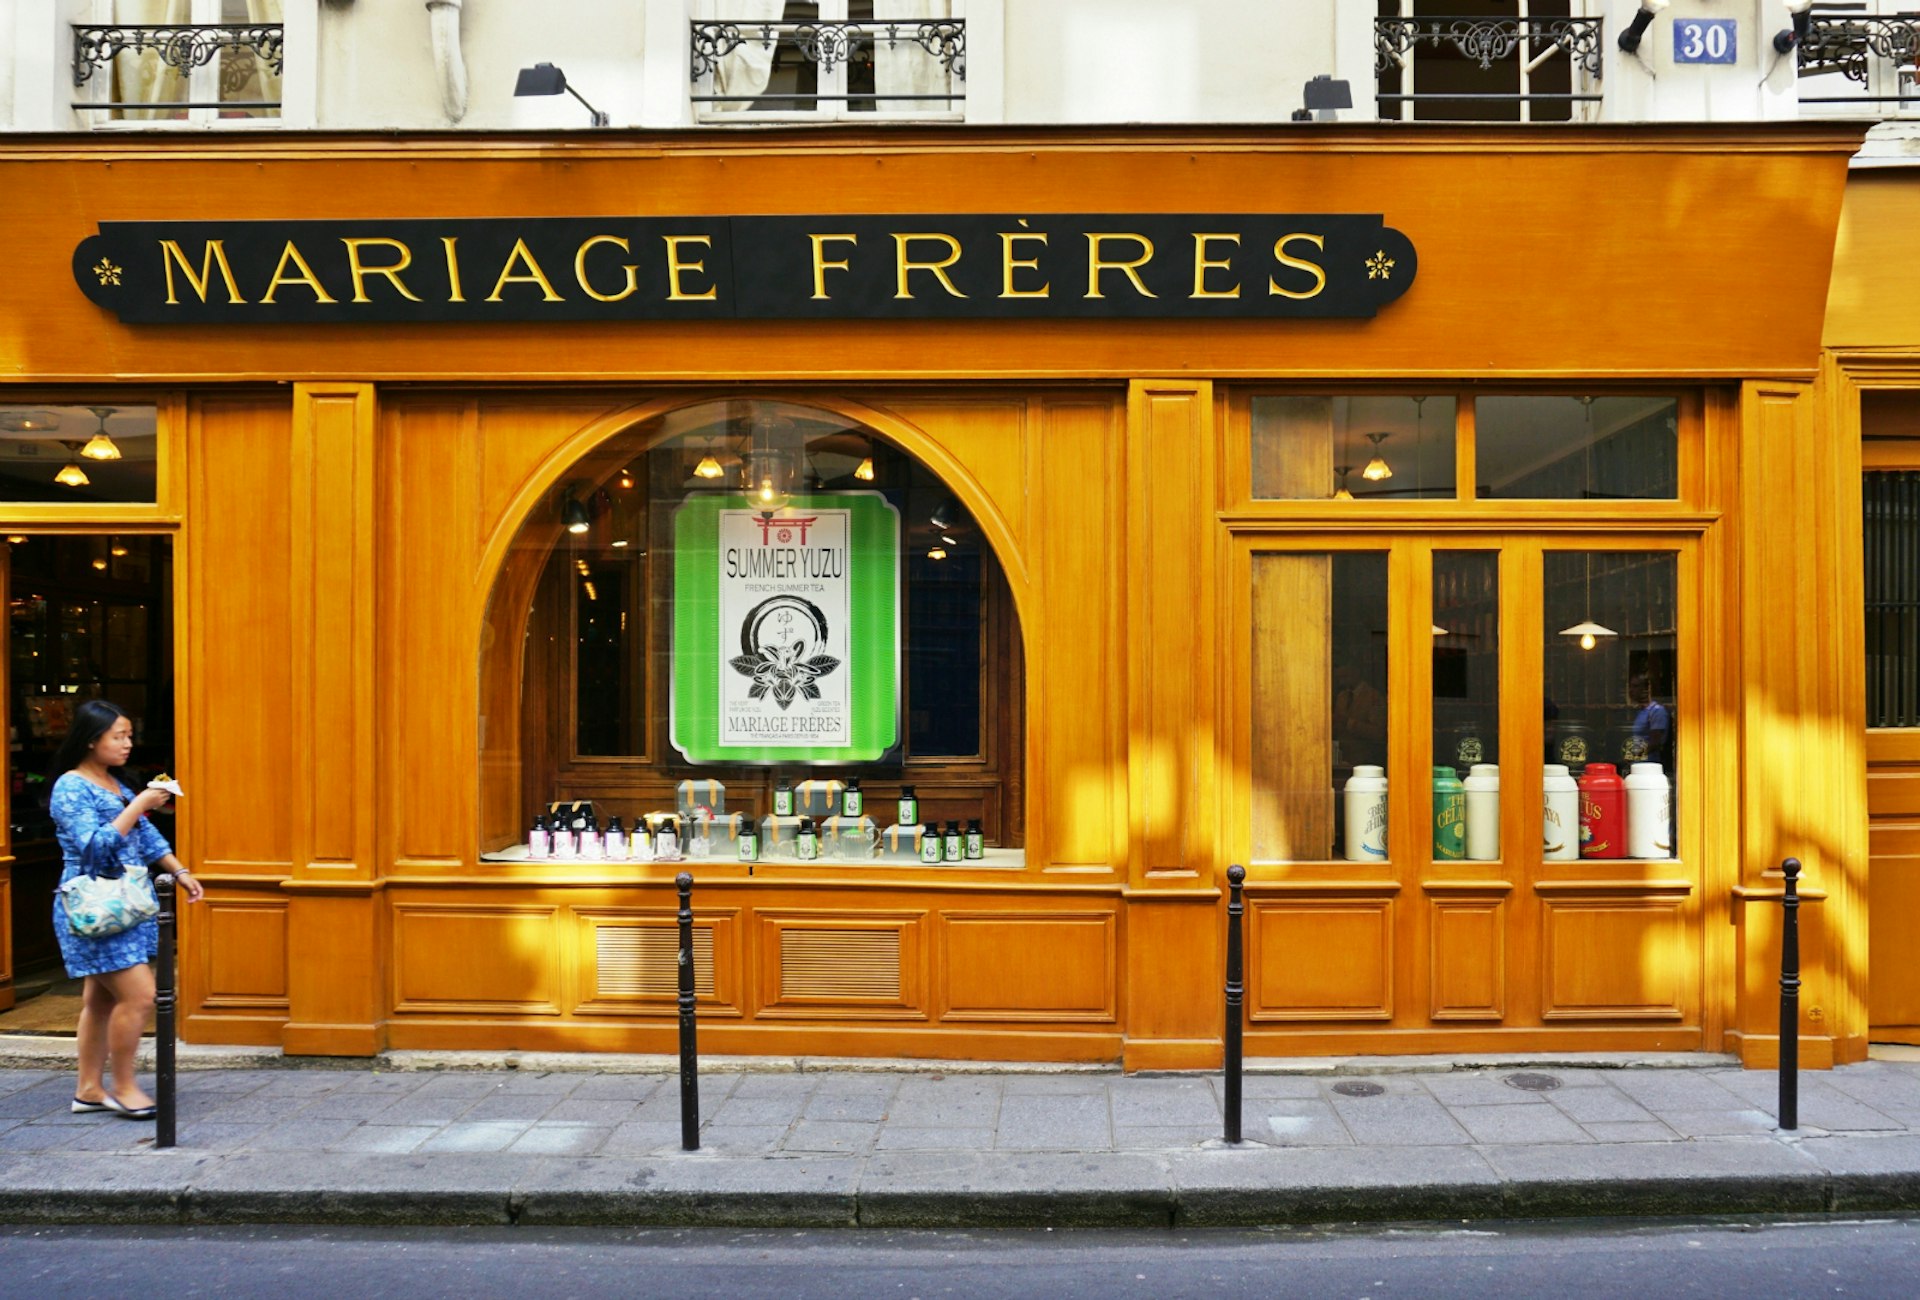 The original Mariage Freres French gourmet tea company in the Marais neighborhood of Paris